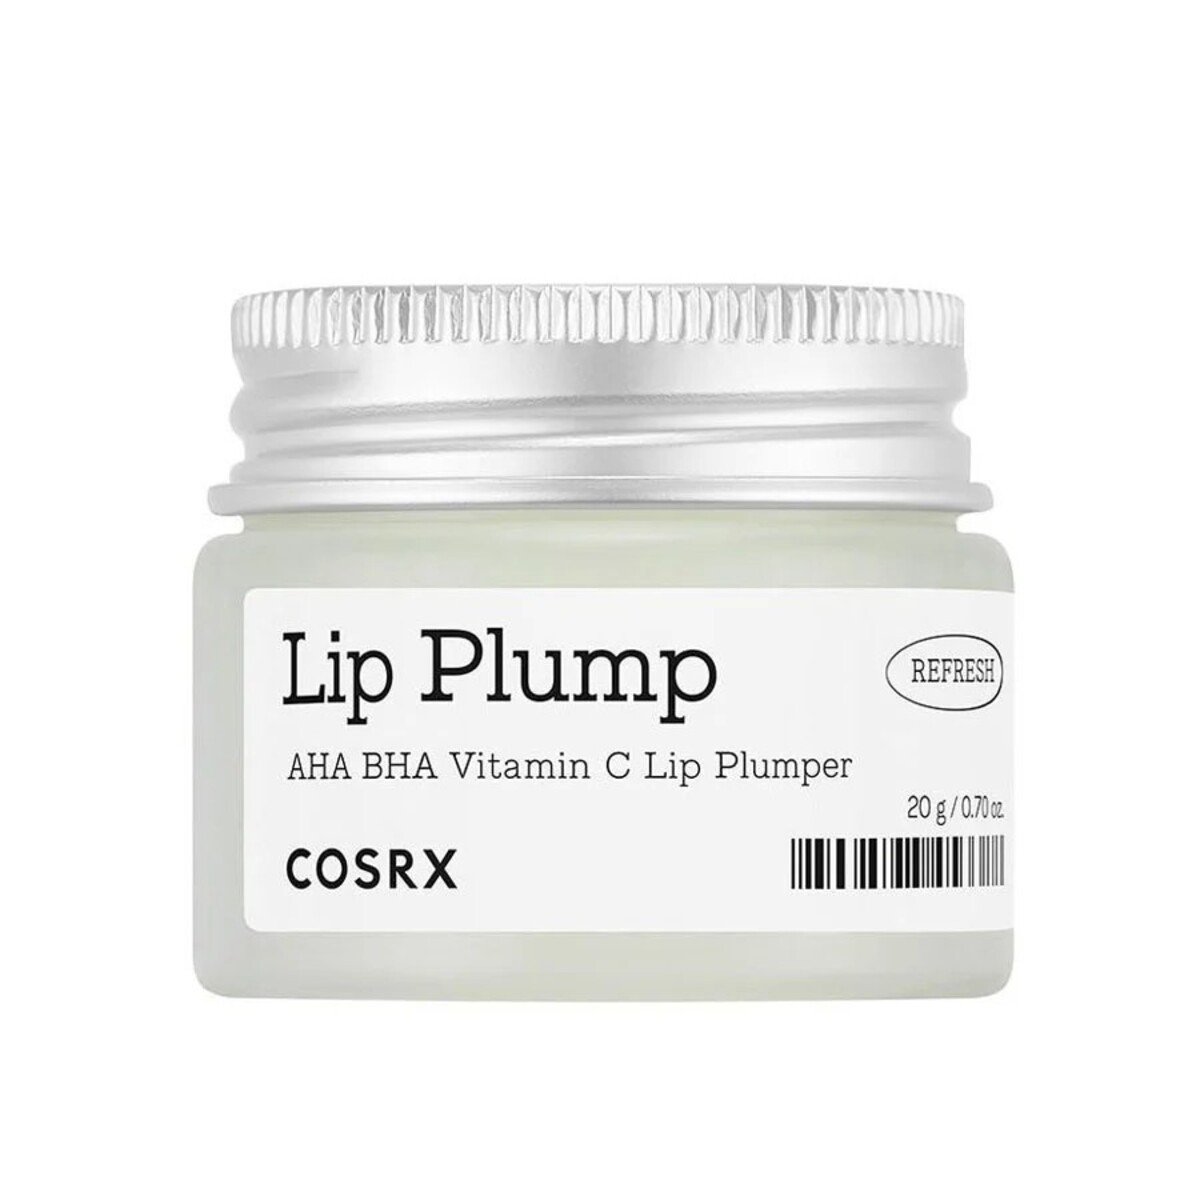 COSRX AHA/BHA Refresher Vitamin C Lip Plumper